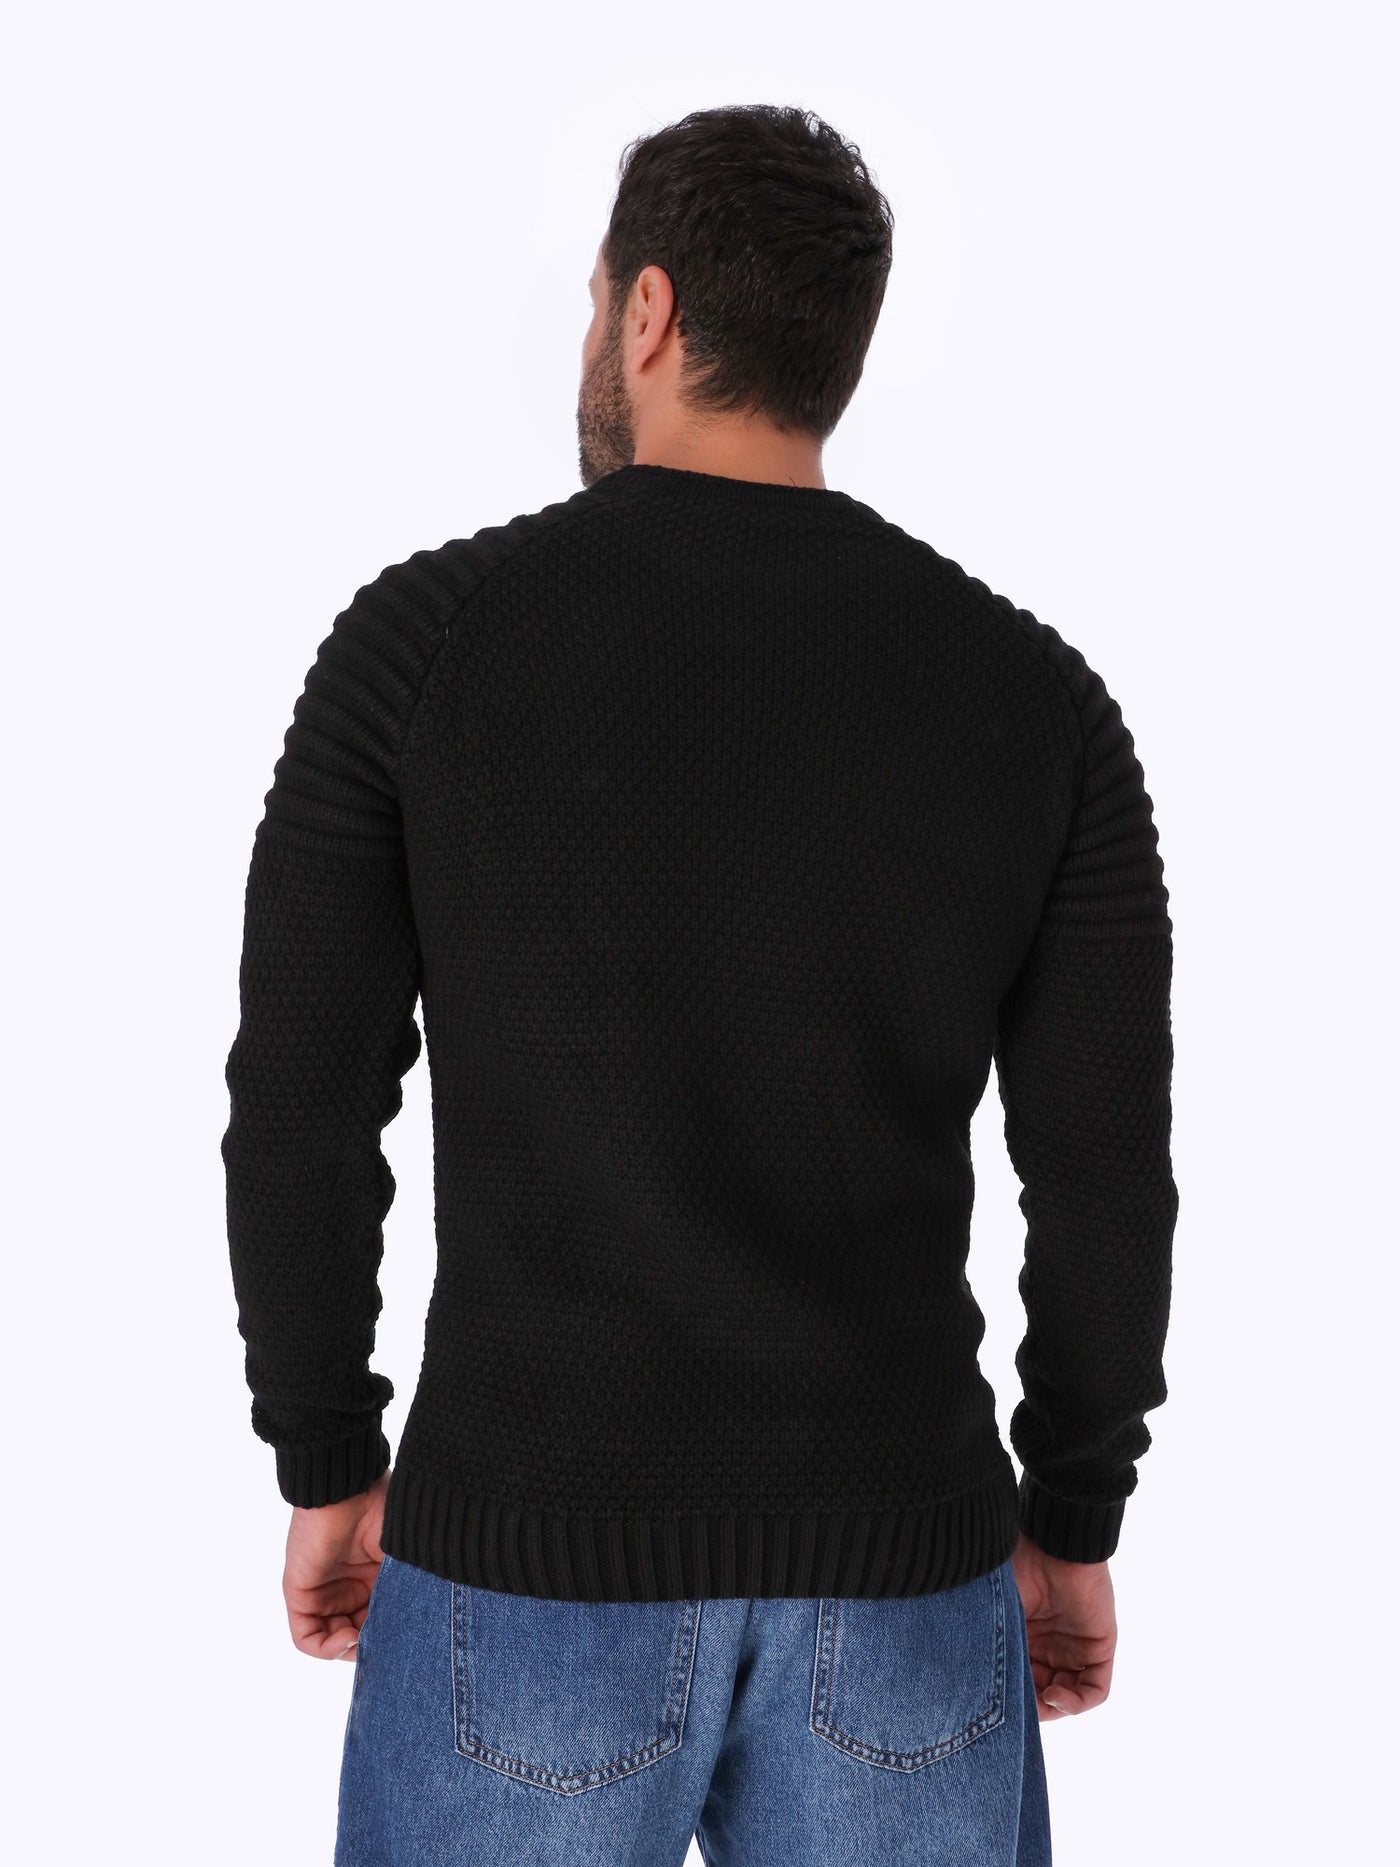 OR Men's Textured Ribbed Shoulder Sweater